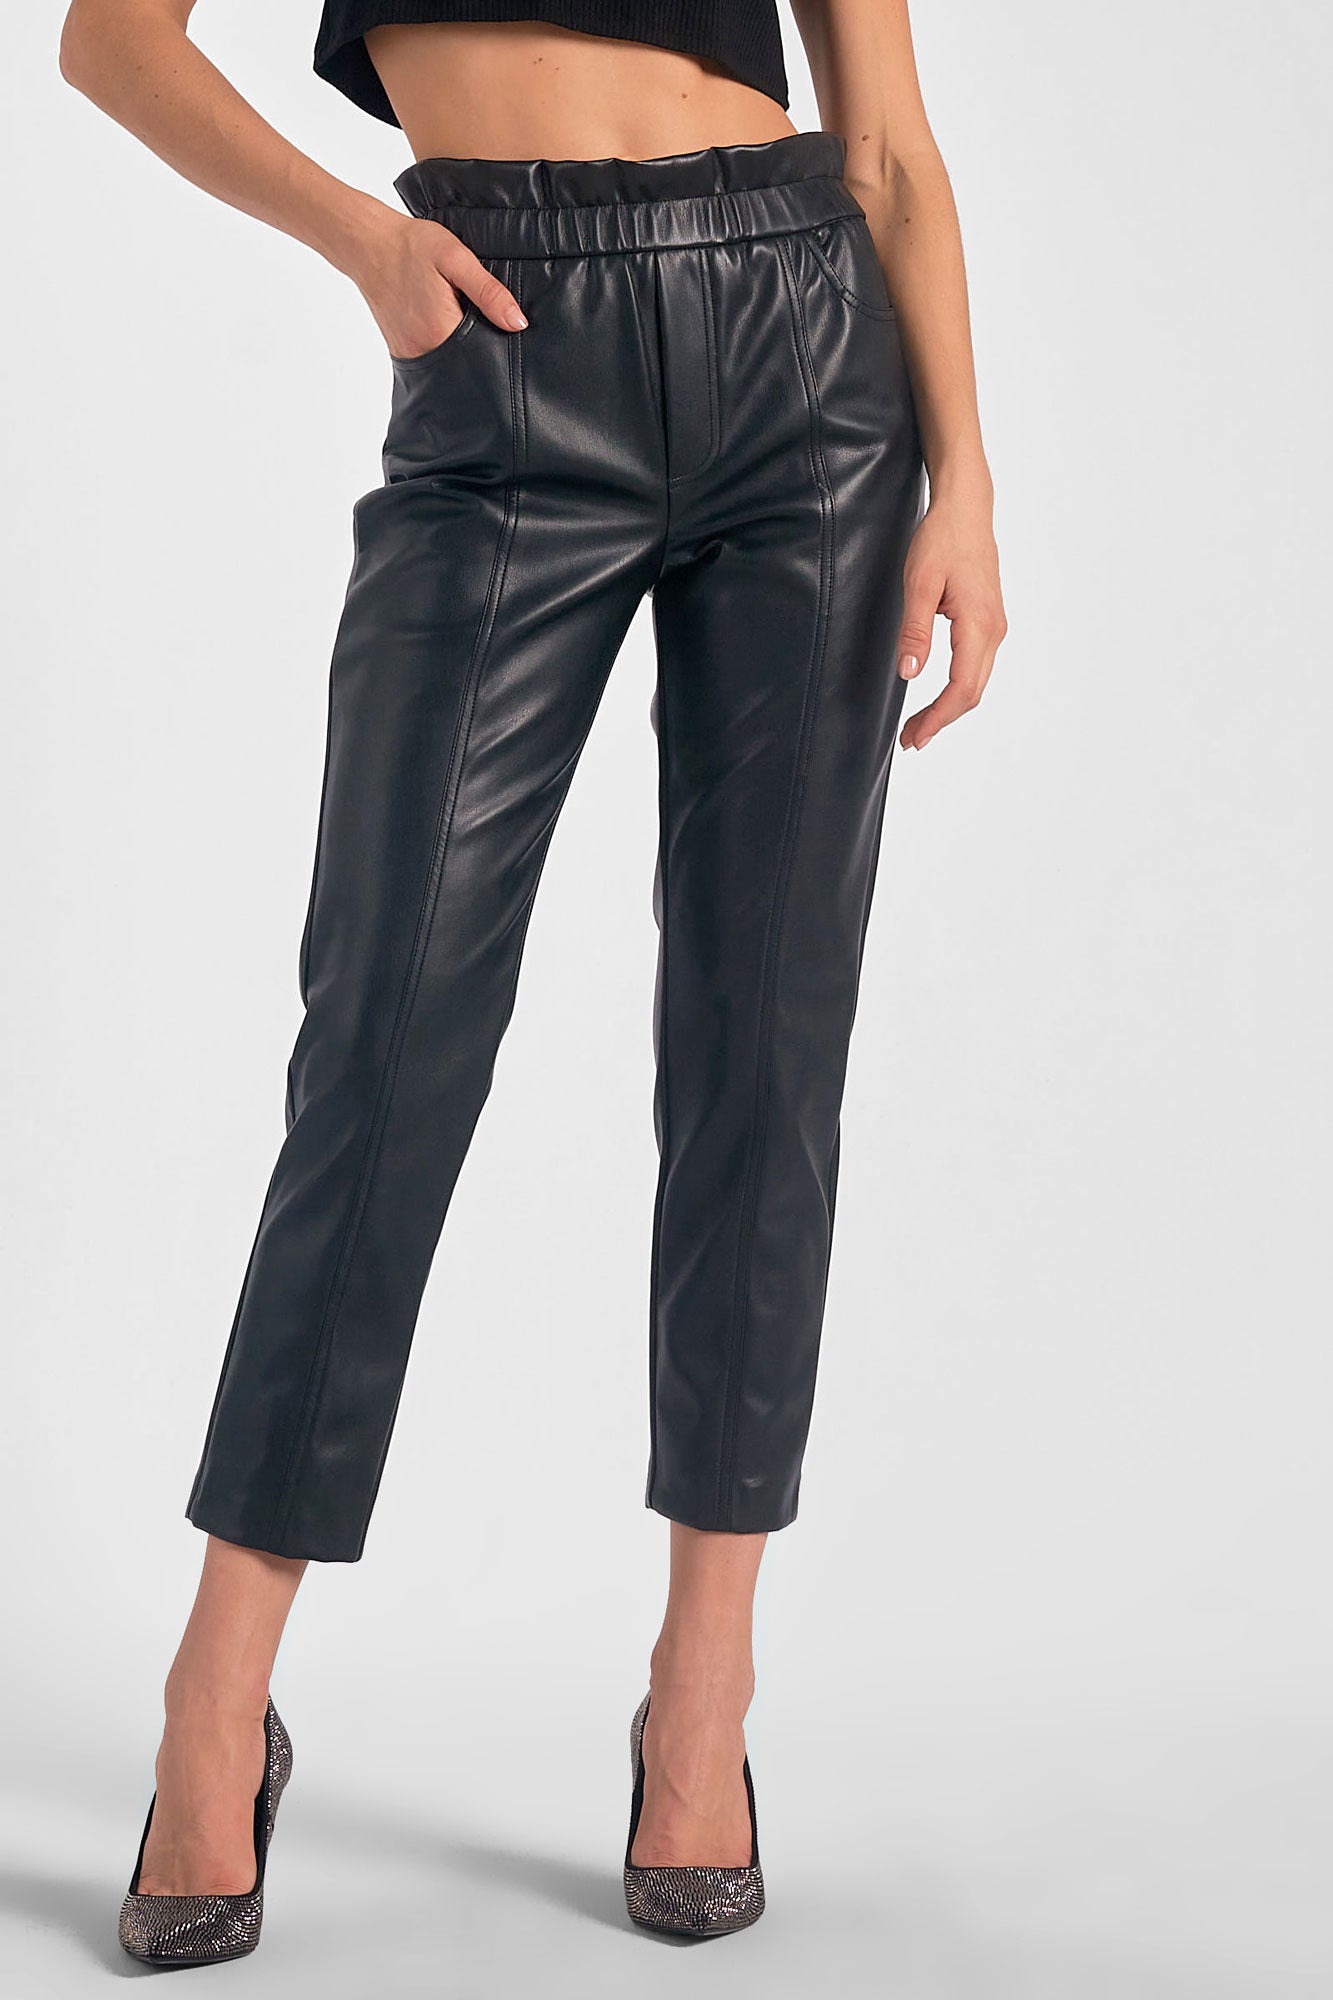 Elan - Women - Black Elastic Ruffle Vegan Leather Pants